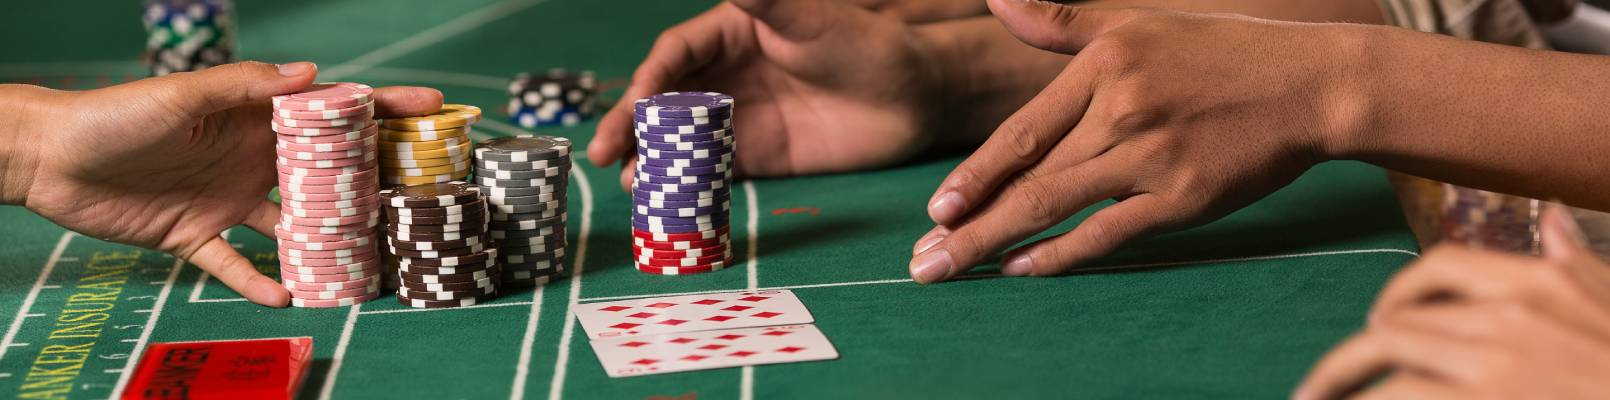 baccarat casino live pokerstars